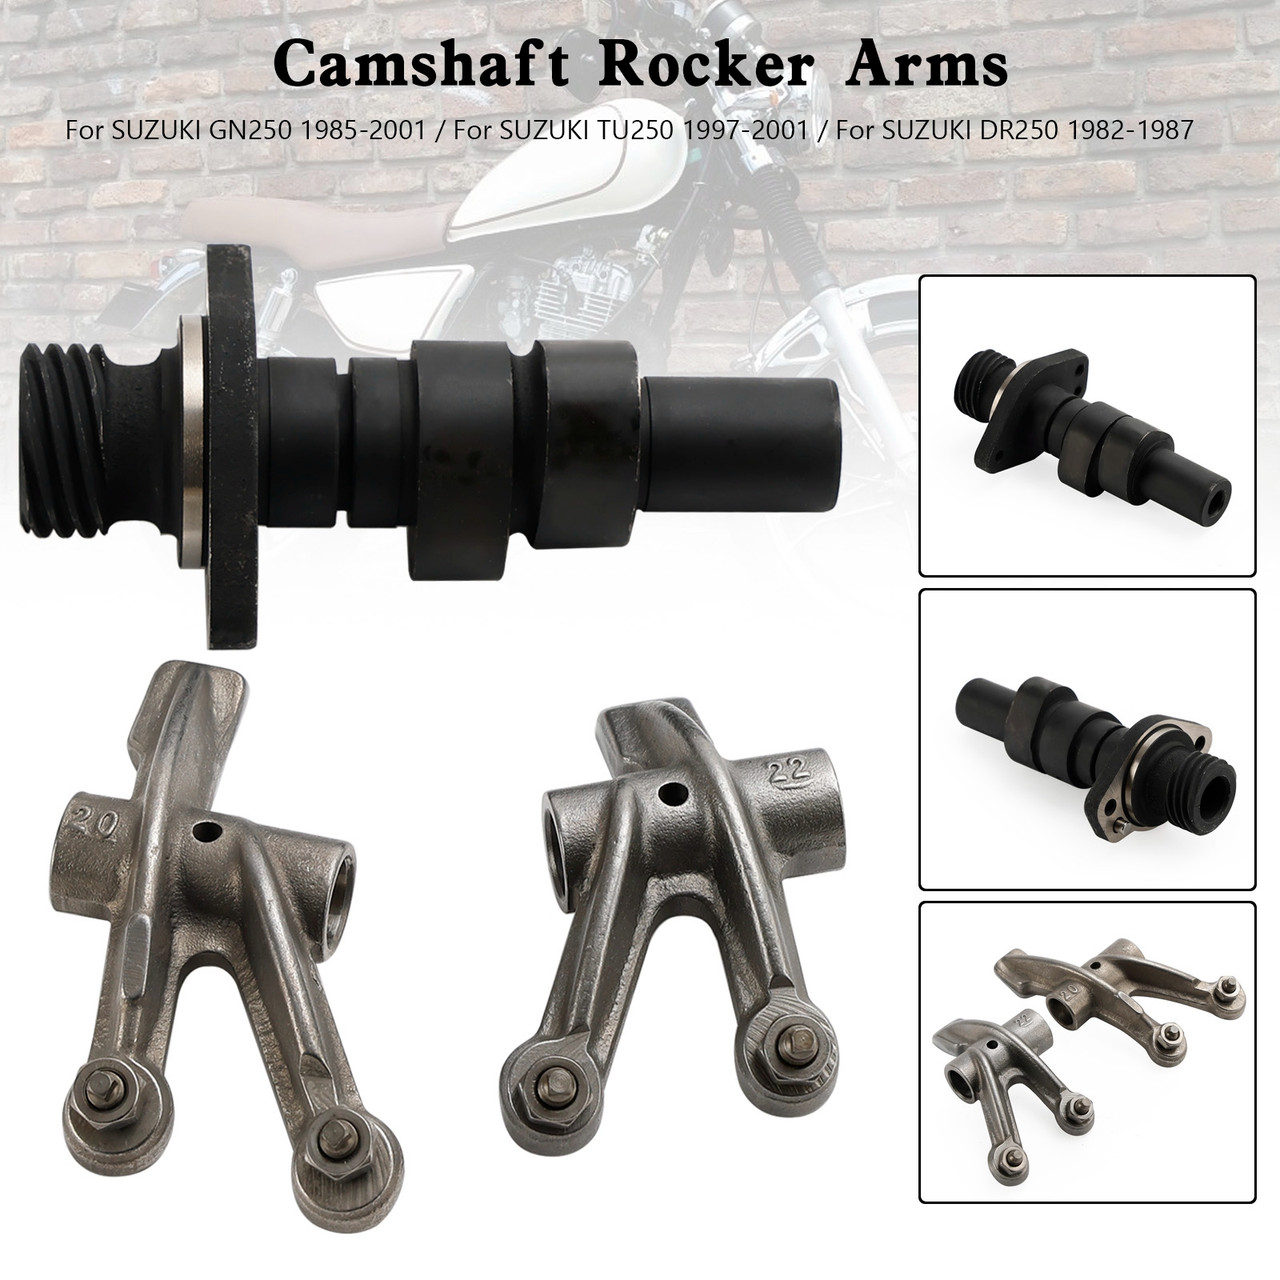 Camshaft Rocker Arms for Suzuki DR250 82-87 GN250 85-01 TU250 1997-2001